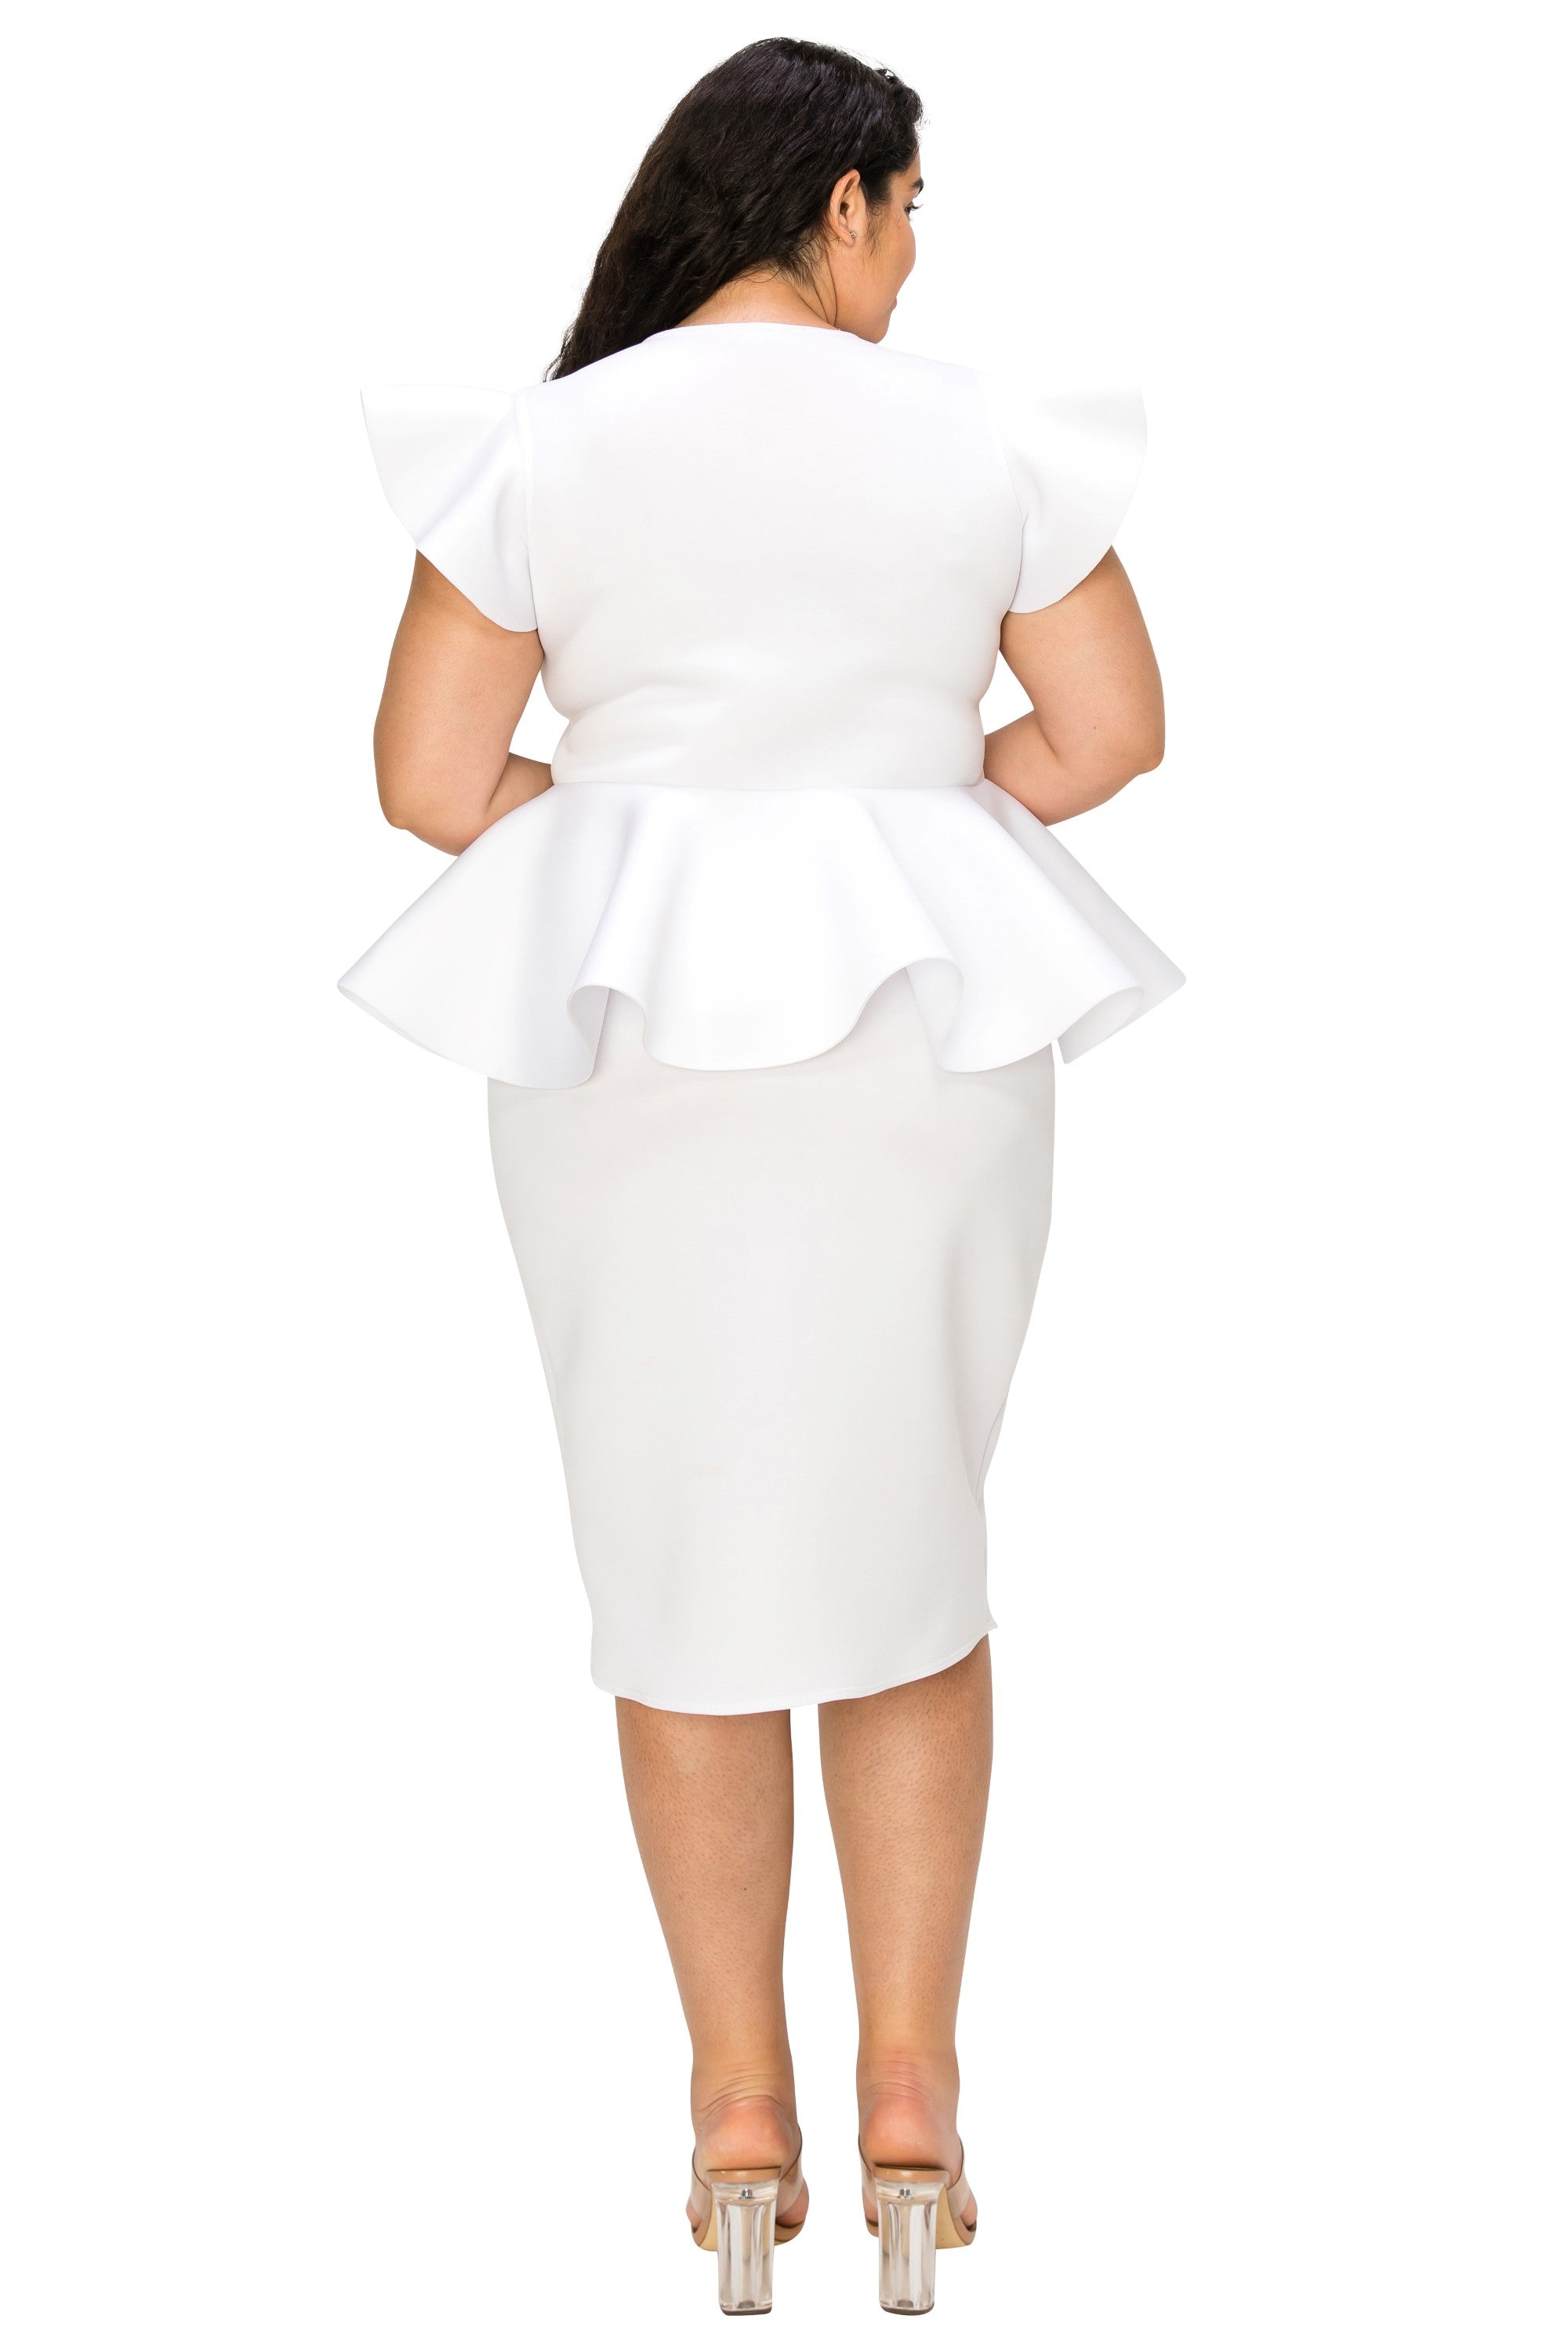 Buy Fuchsia Fine Silk Bandhani Maxi Draped Dress With Peplum Top For Women  by Studio Bagechaa Online at Aza Fashions.